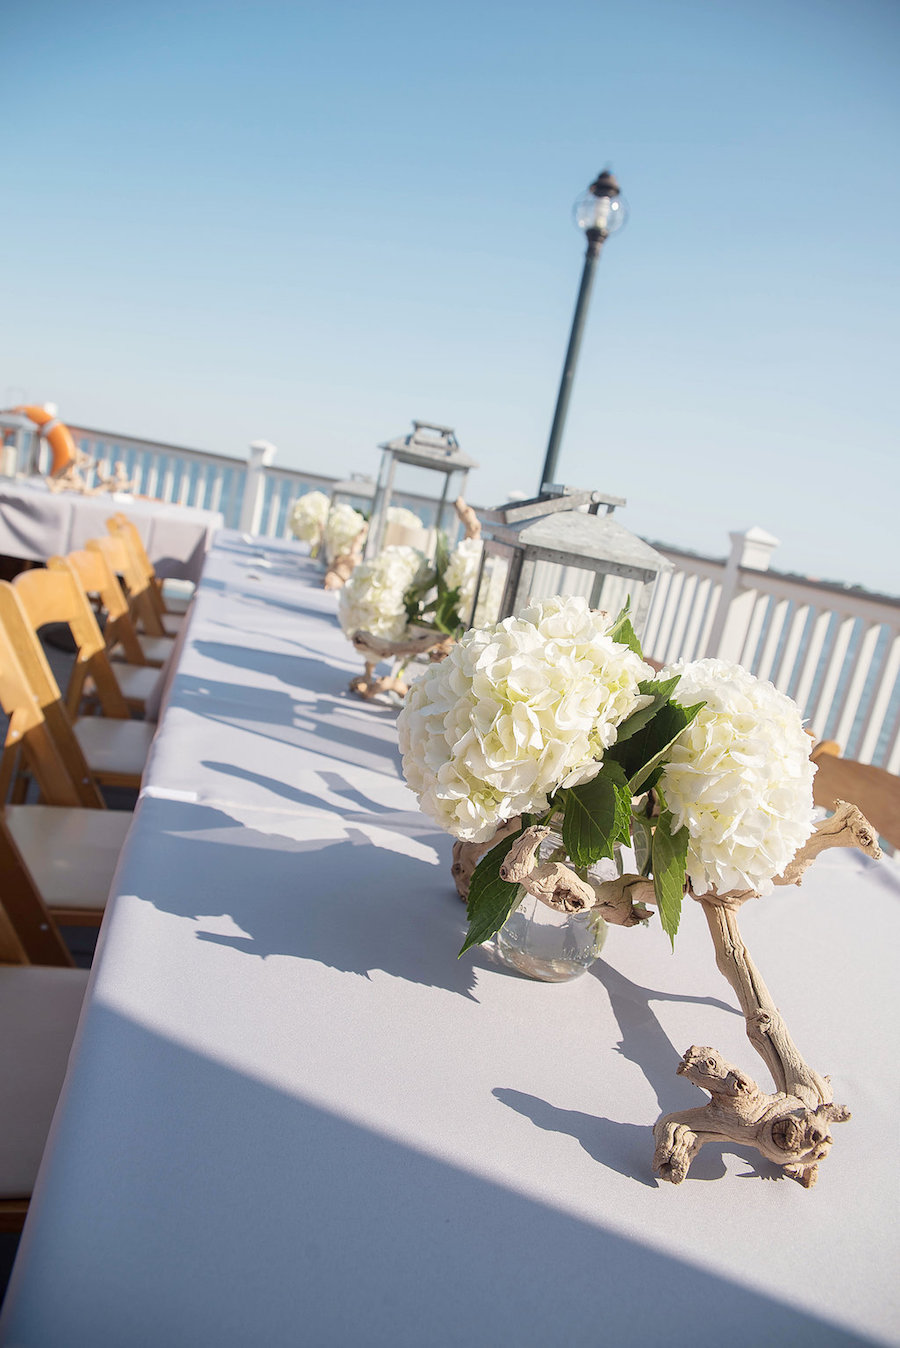 Outdoor Wedding Reception Decor with Ivory Hydrangeas and Beachwood/Driftwood Wedding Centerpieces